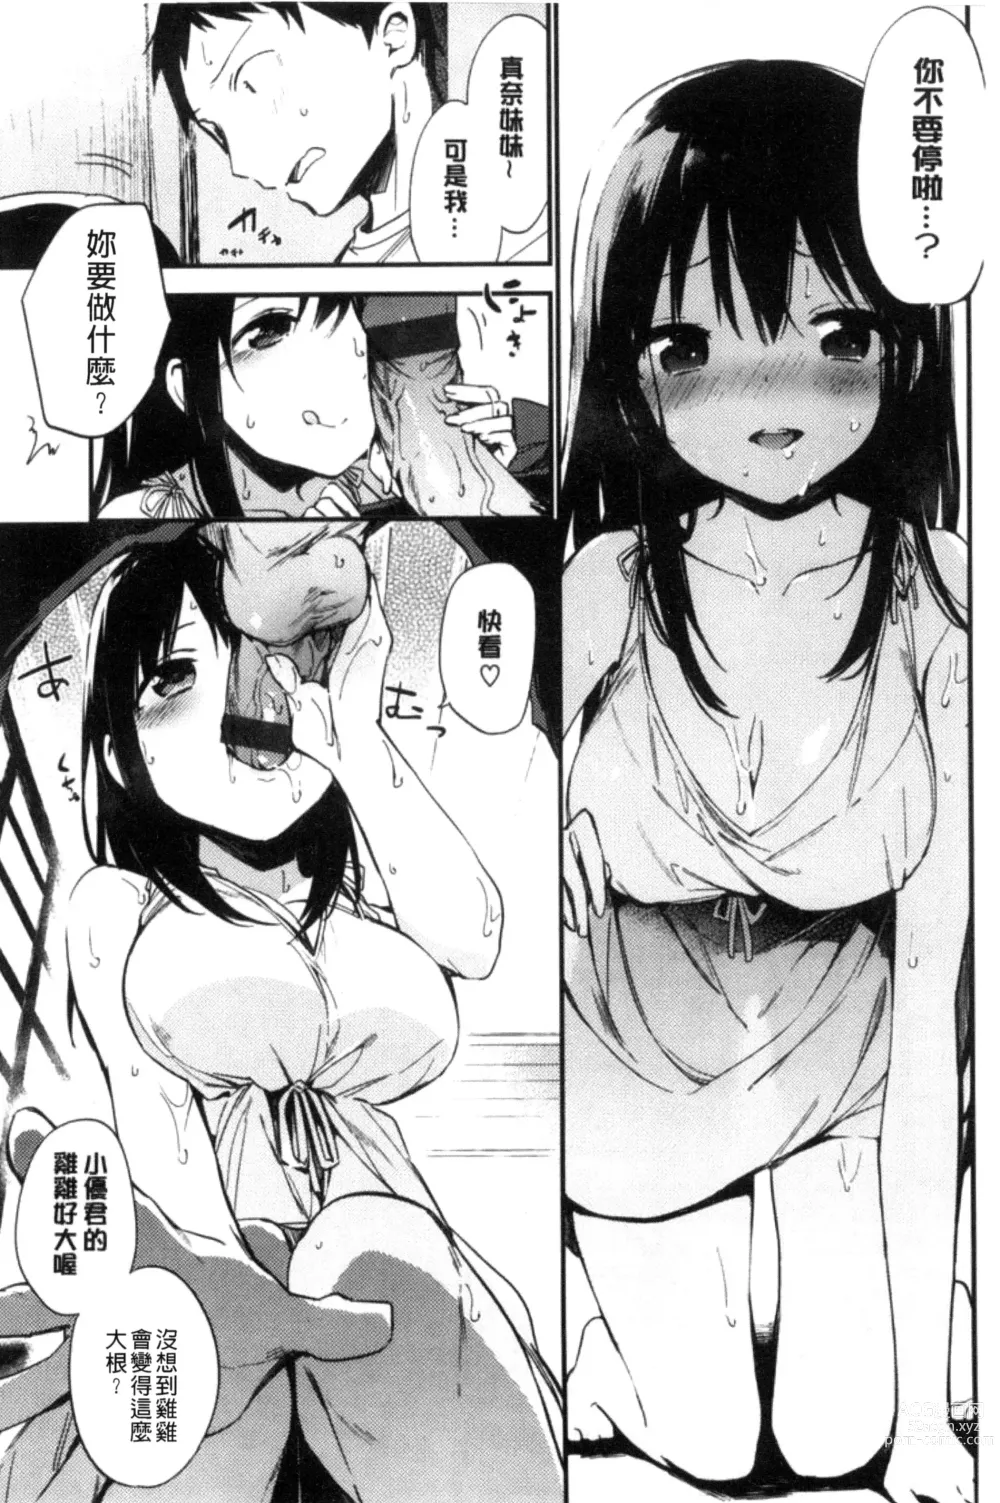 Page 200 of manga Naishogoto